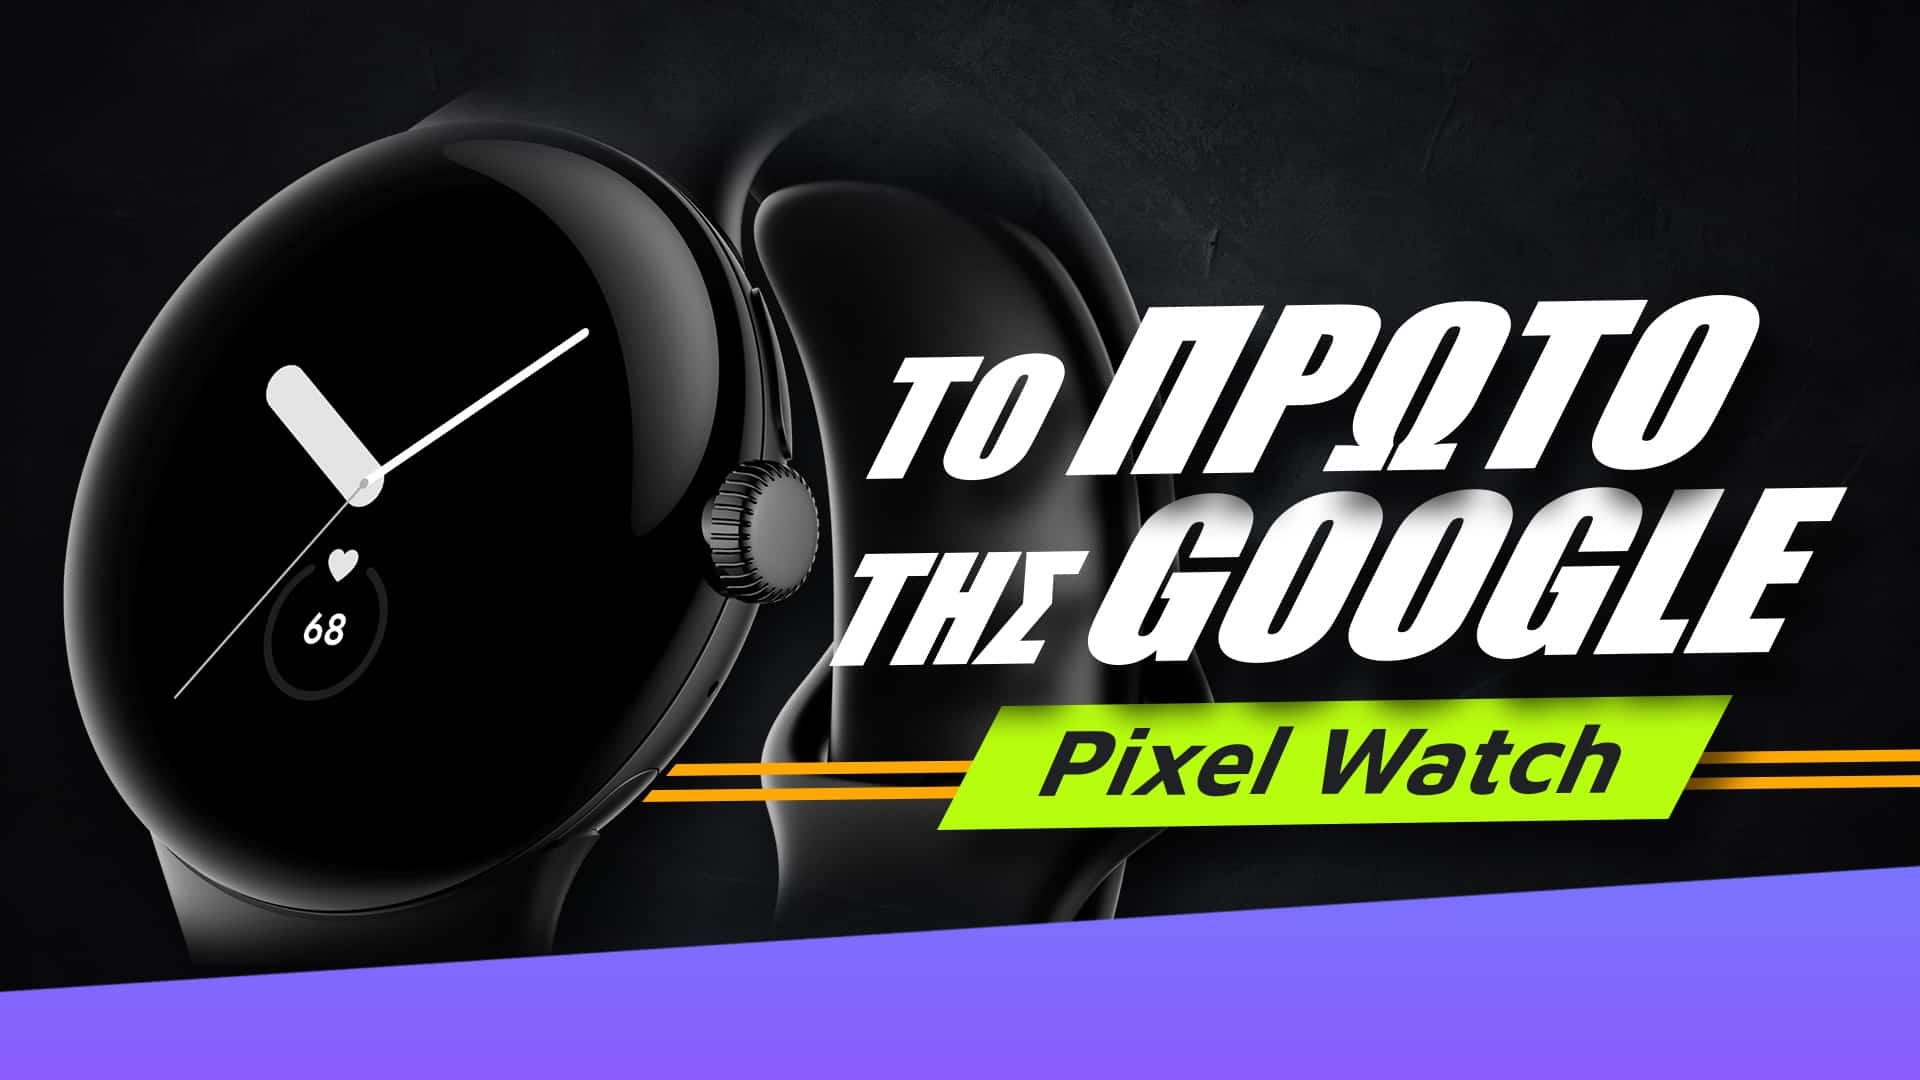 Pixel Watch Review Greek, Pixel Watch review: Το πρώτο smartwatch της Google